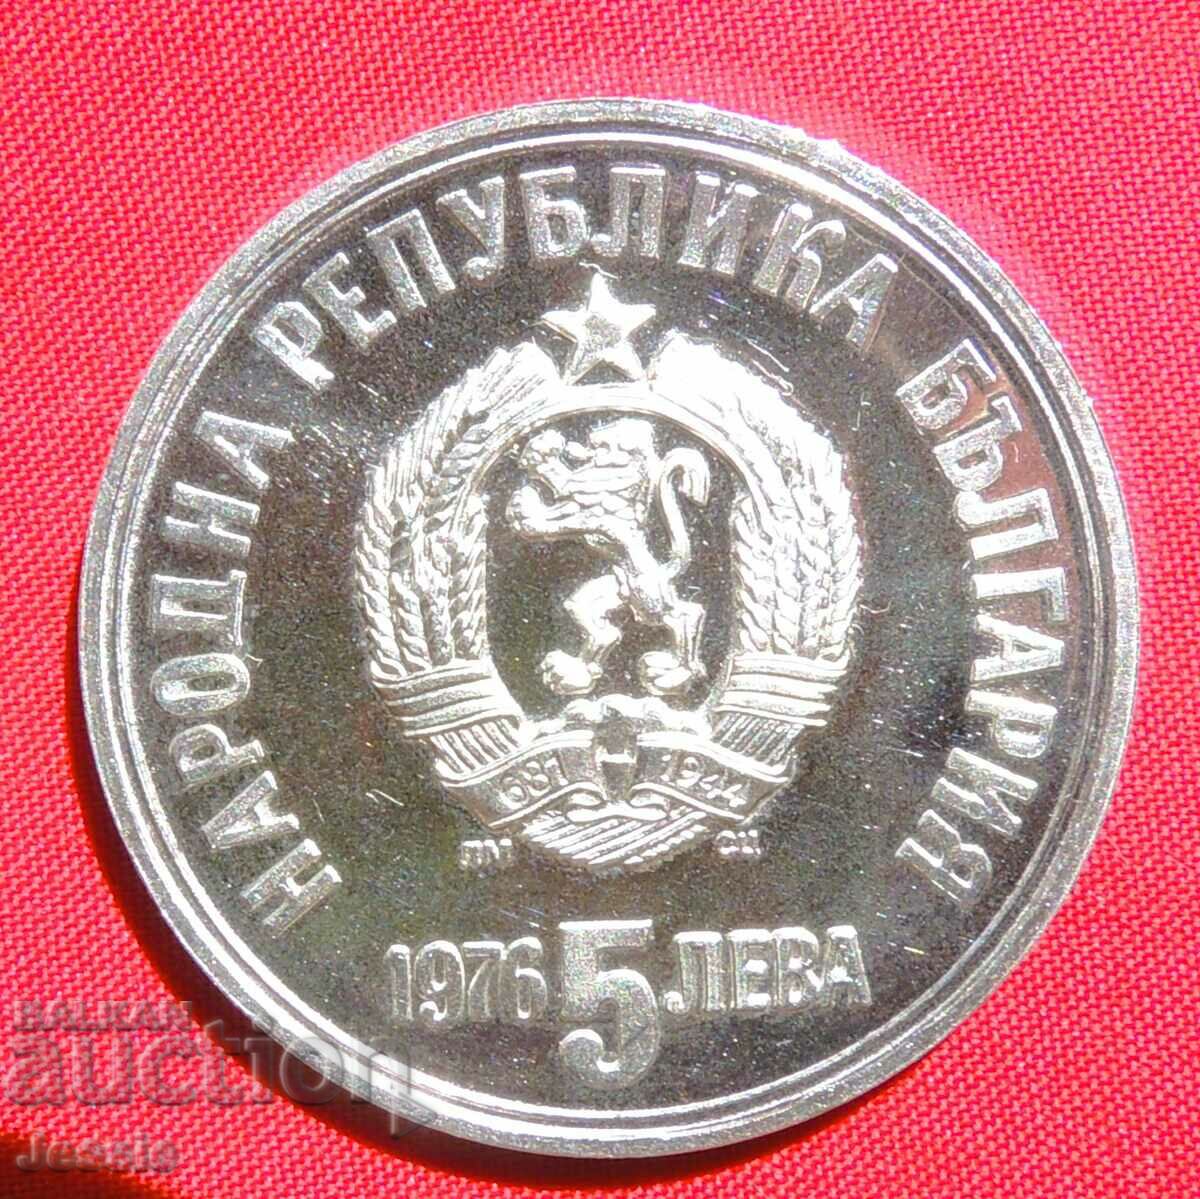 5 BGN 1976 Hristo Botev silver - MINT #2 CURIOSITY MINT